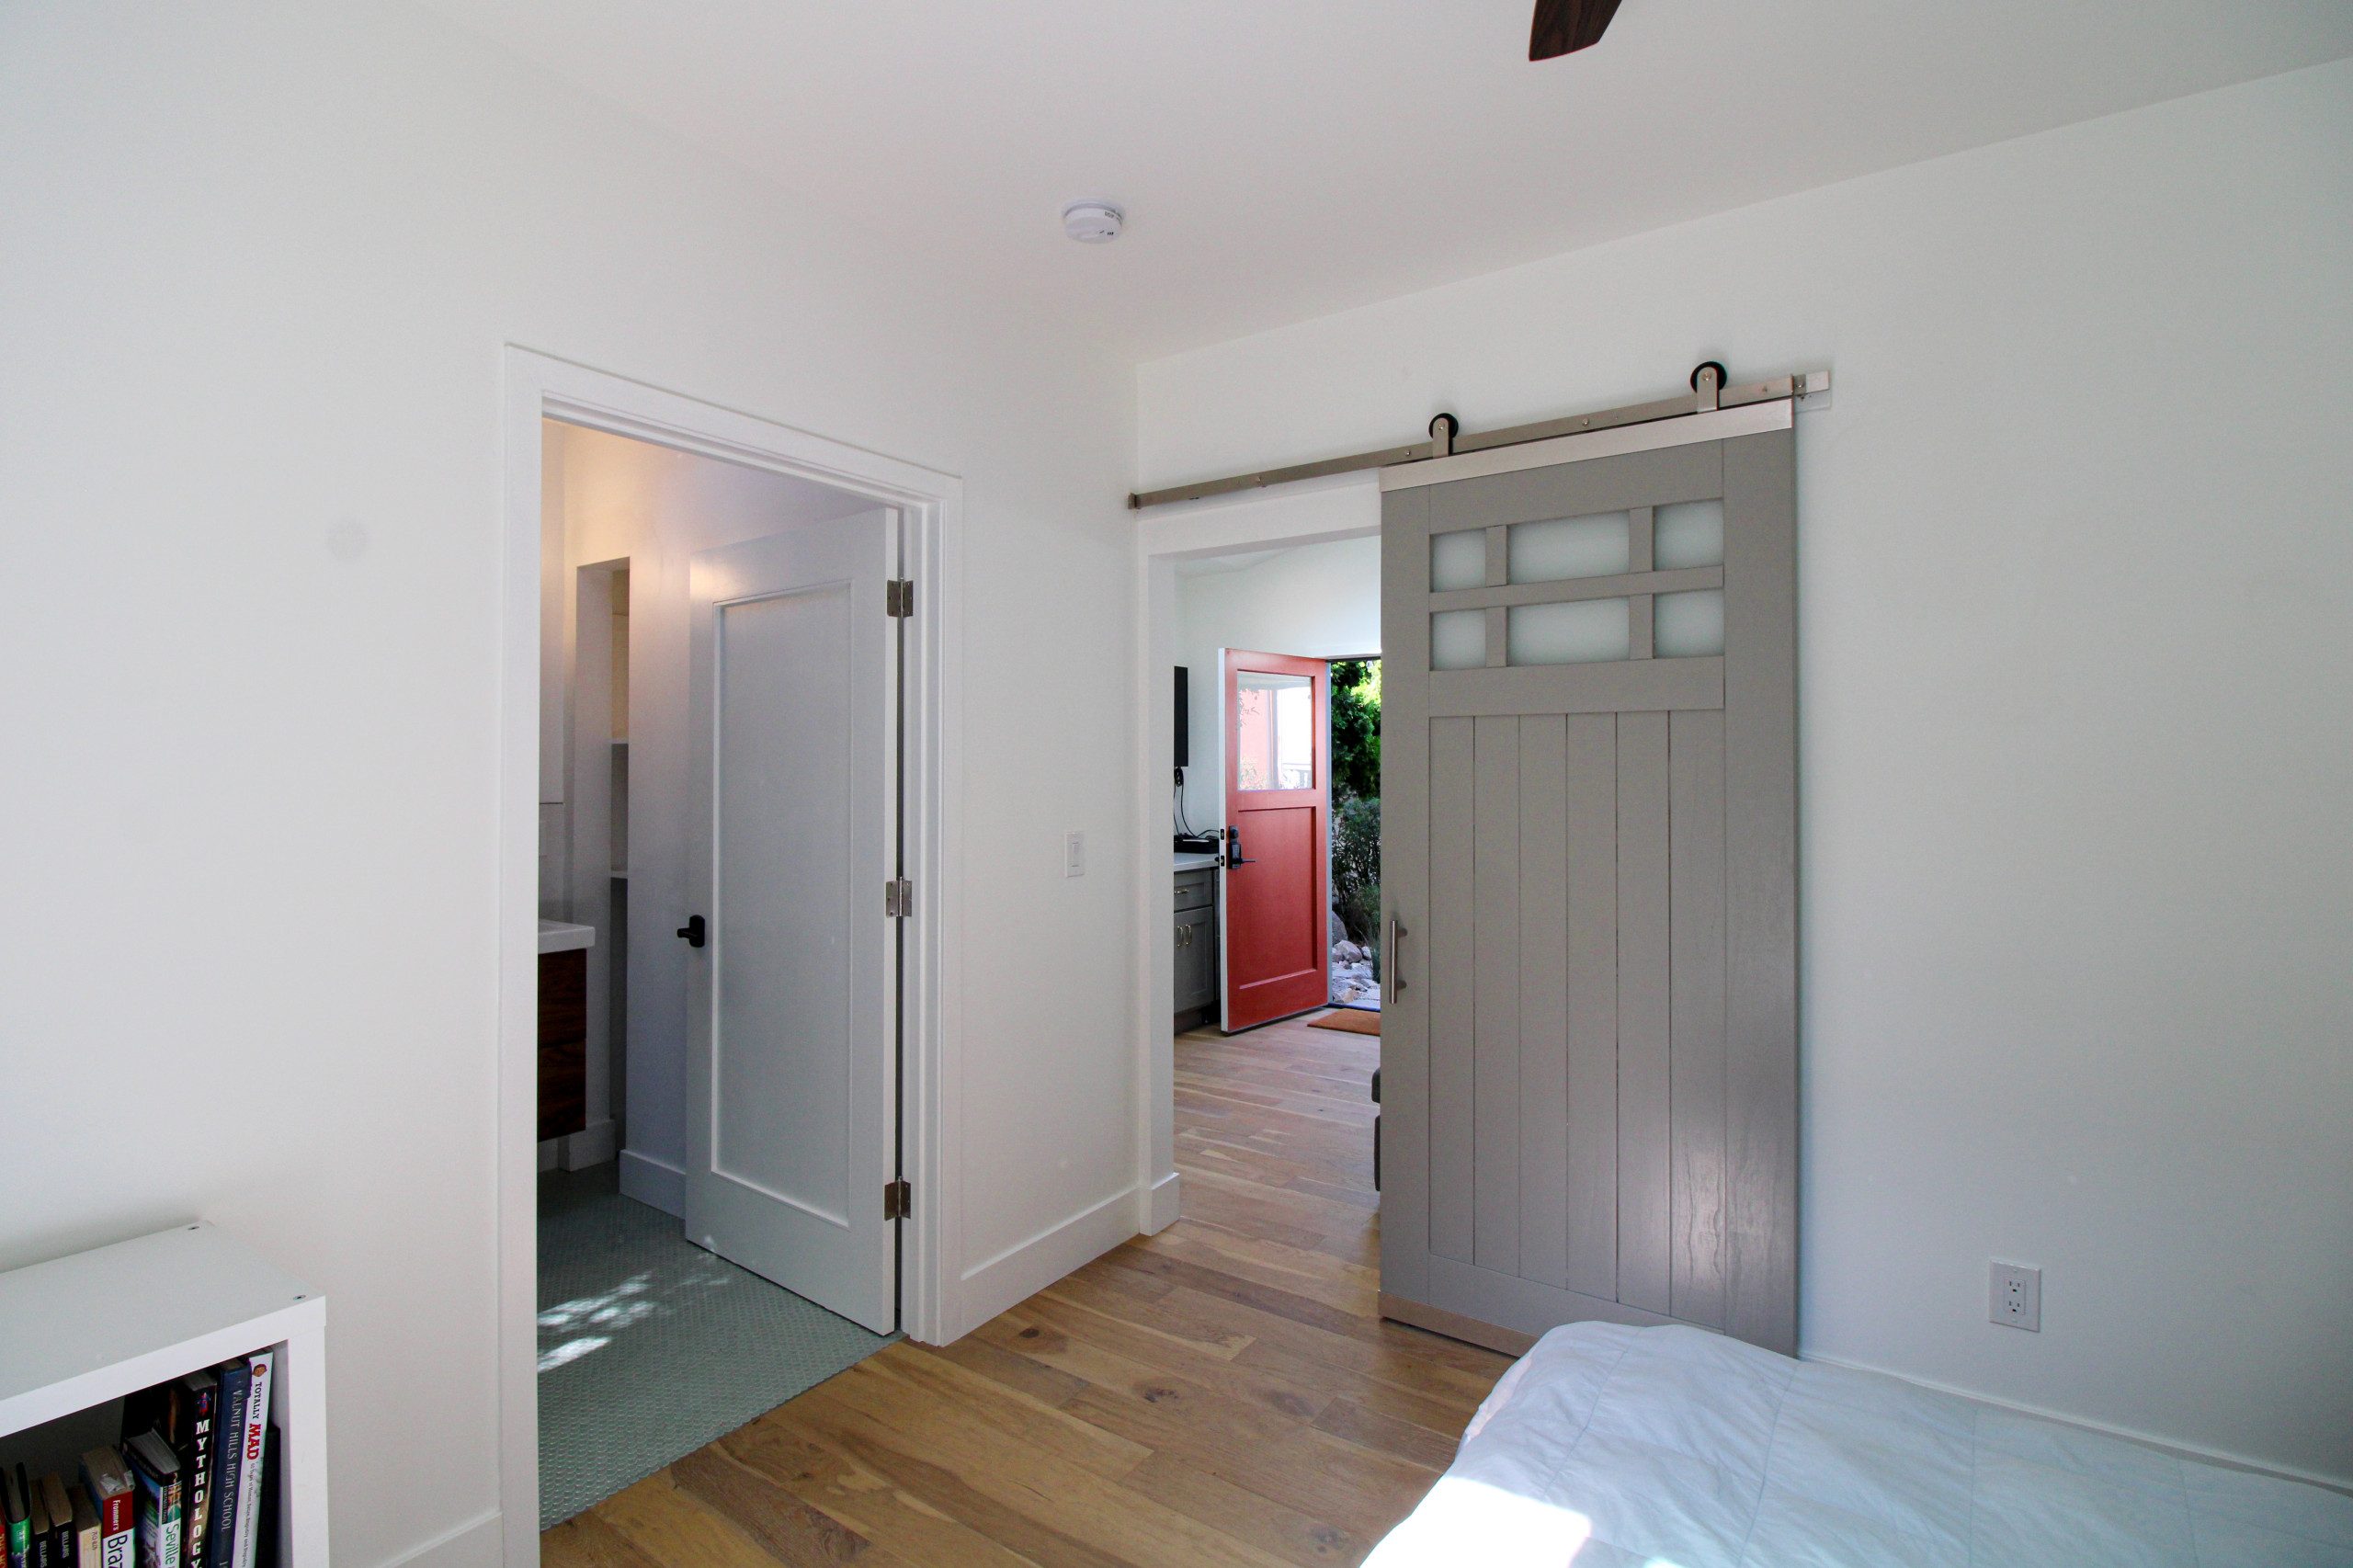 Eagle Rock, CA / Complete Accessory Dwelling Unit Build / Bedroom